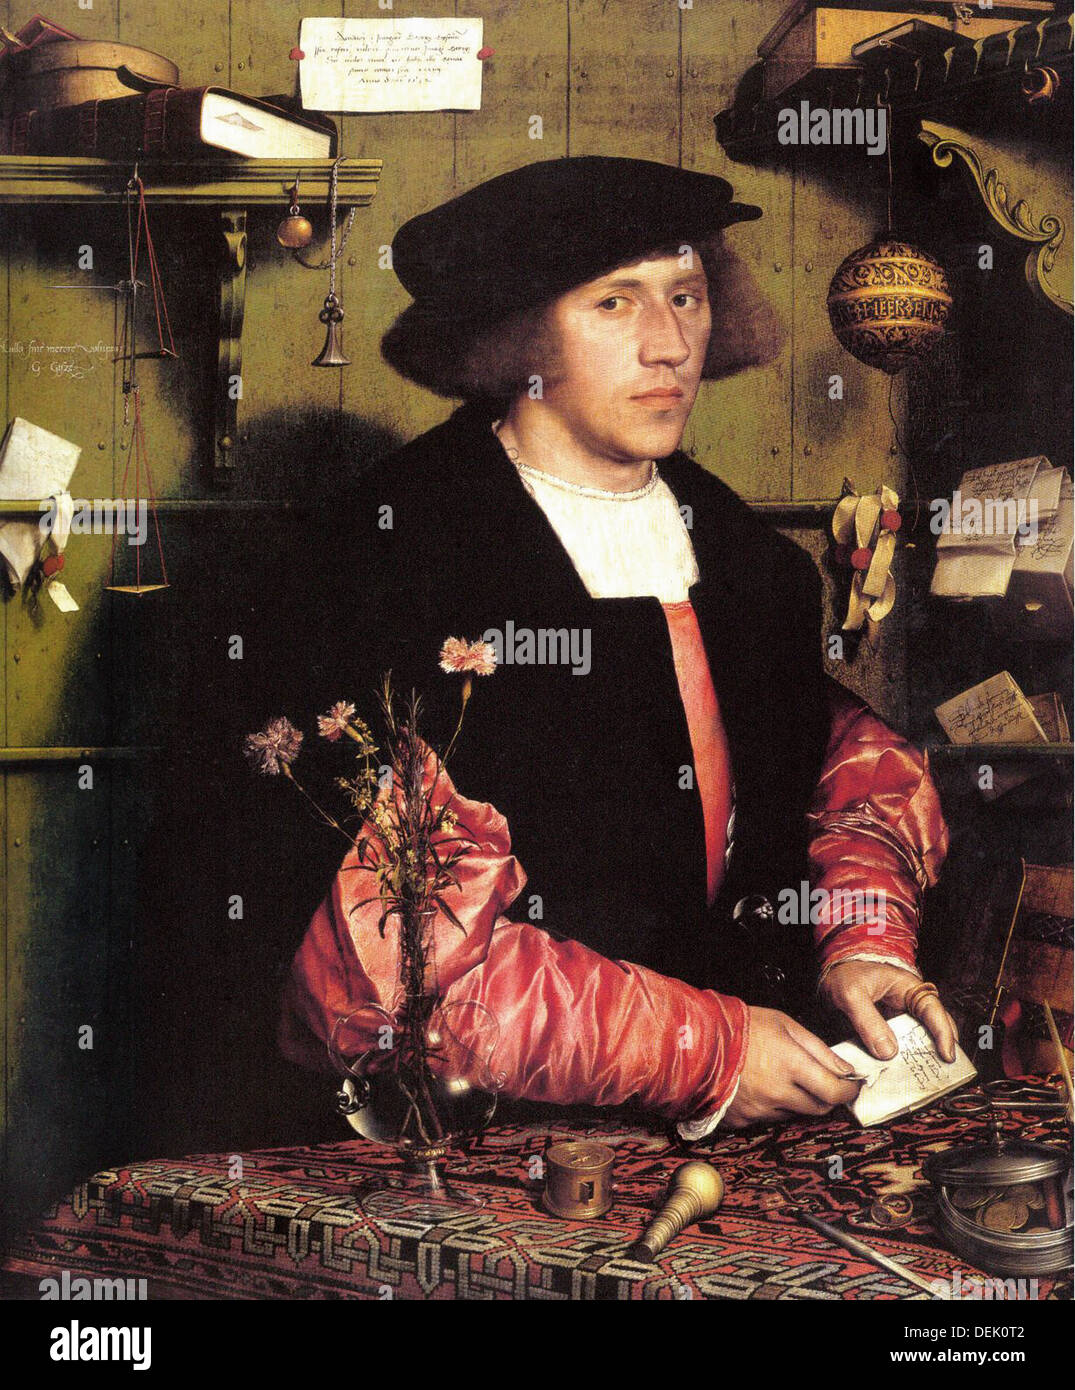 Hans Holbein - Il Mercante Georg Gisze - 1532 - Gemaldegalerie - Berlino Foto Stock